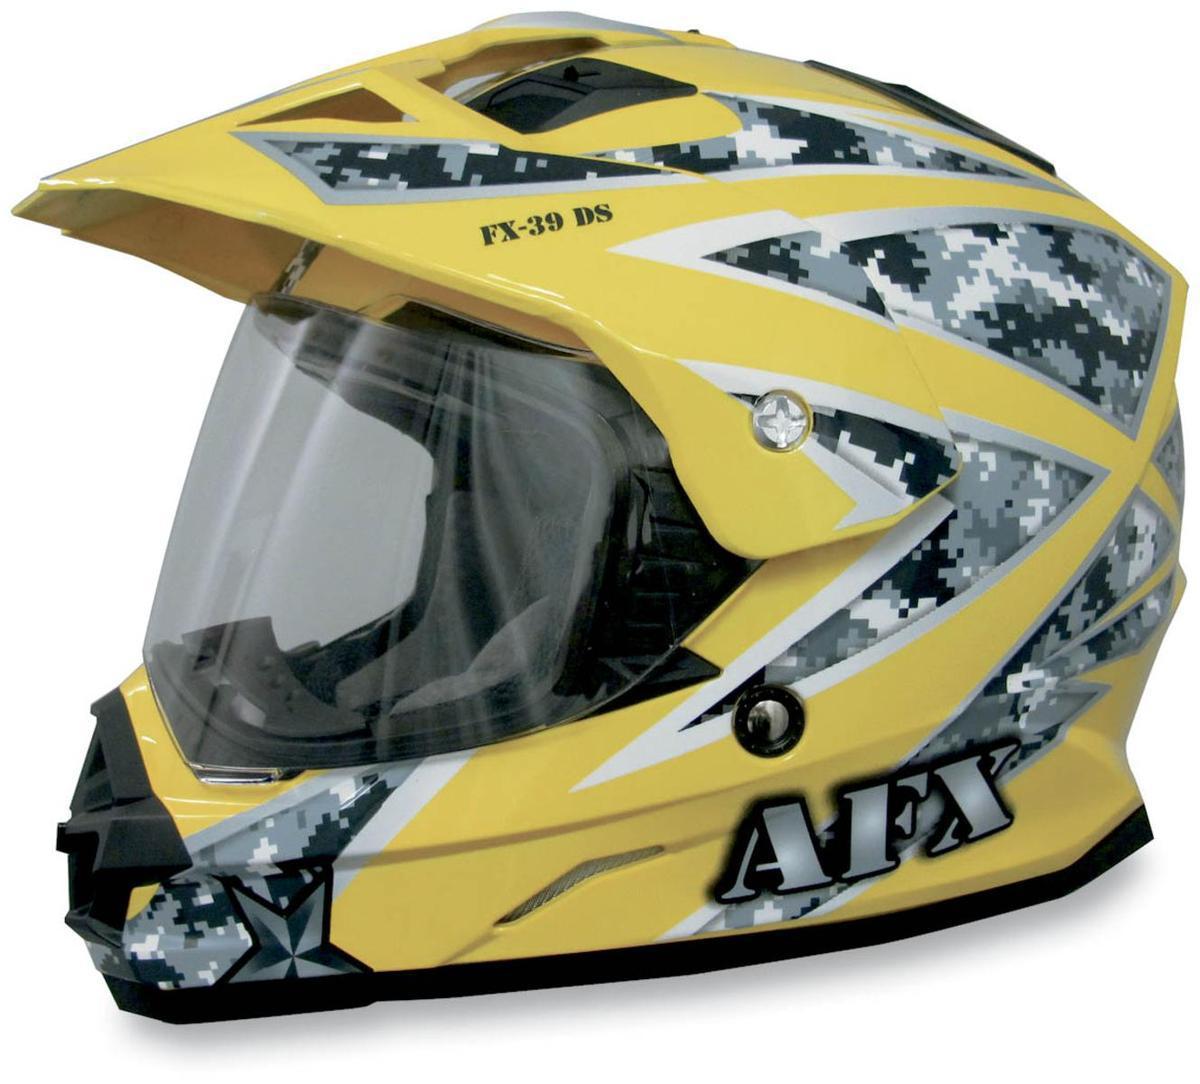 Afx fx-39 dual sport helmet urban yellow